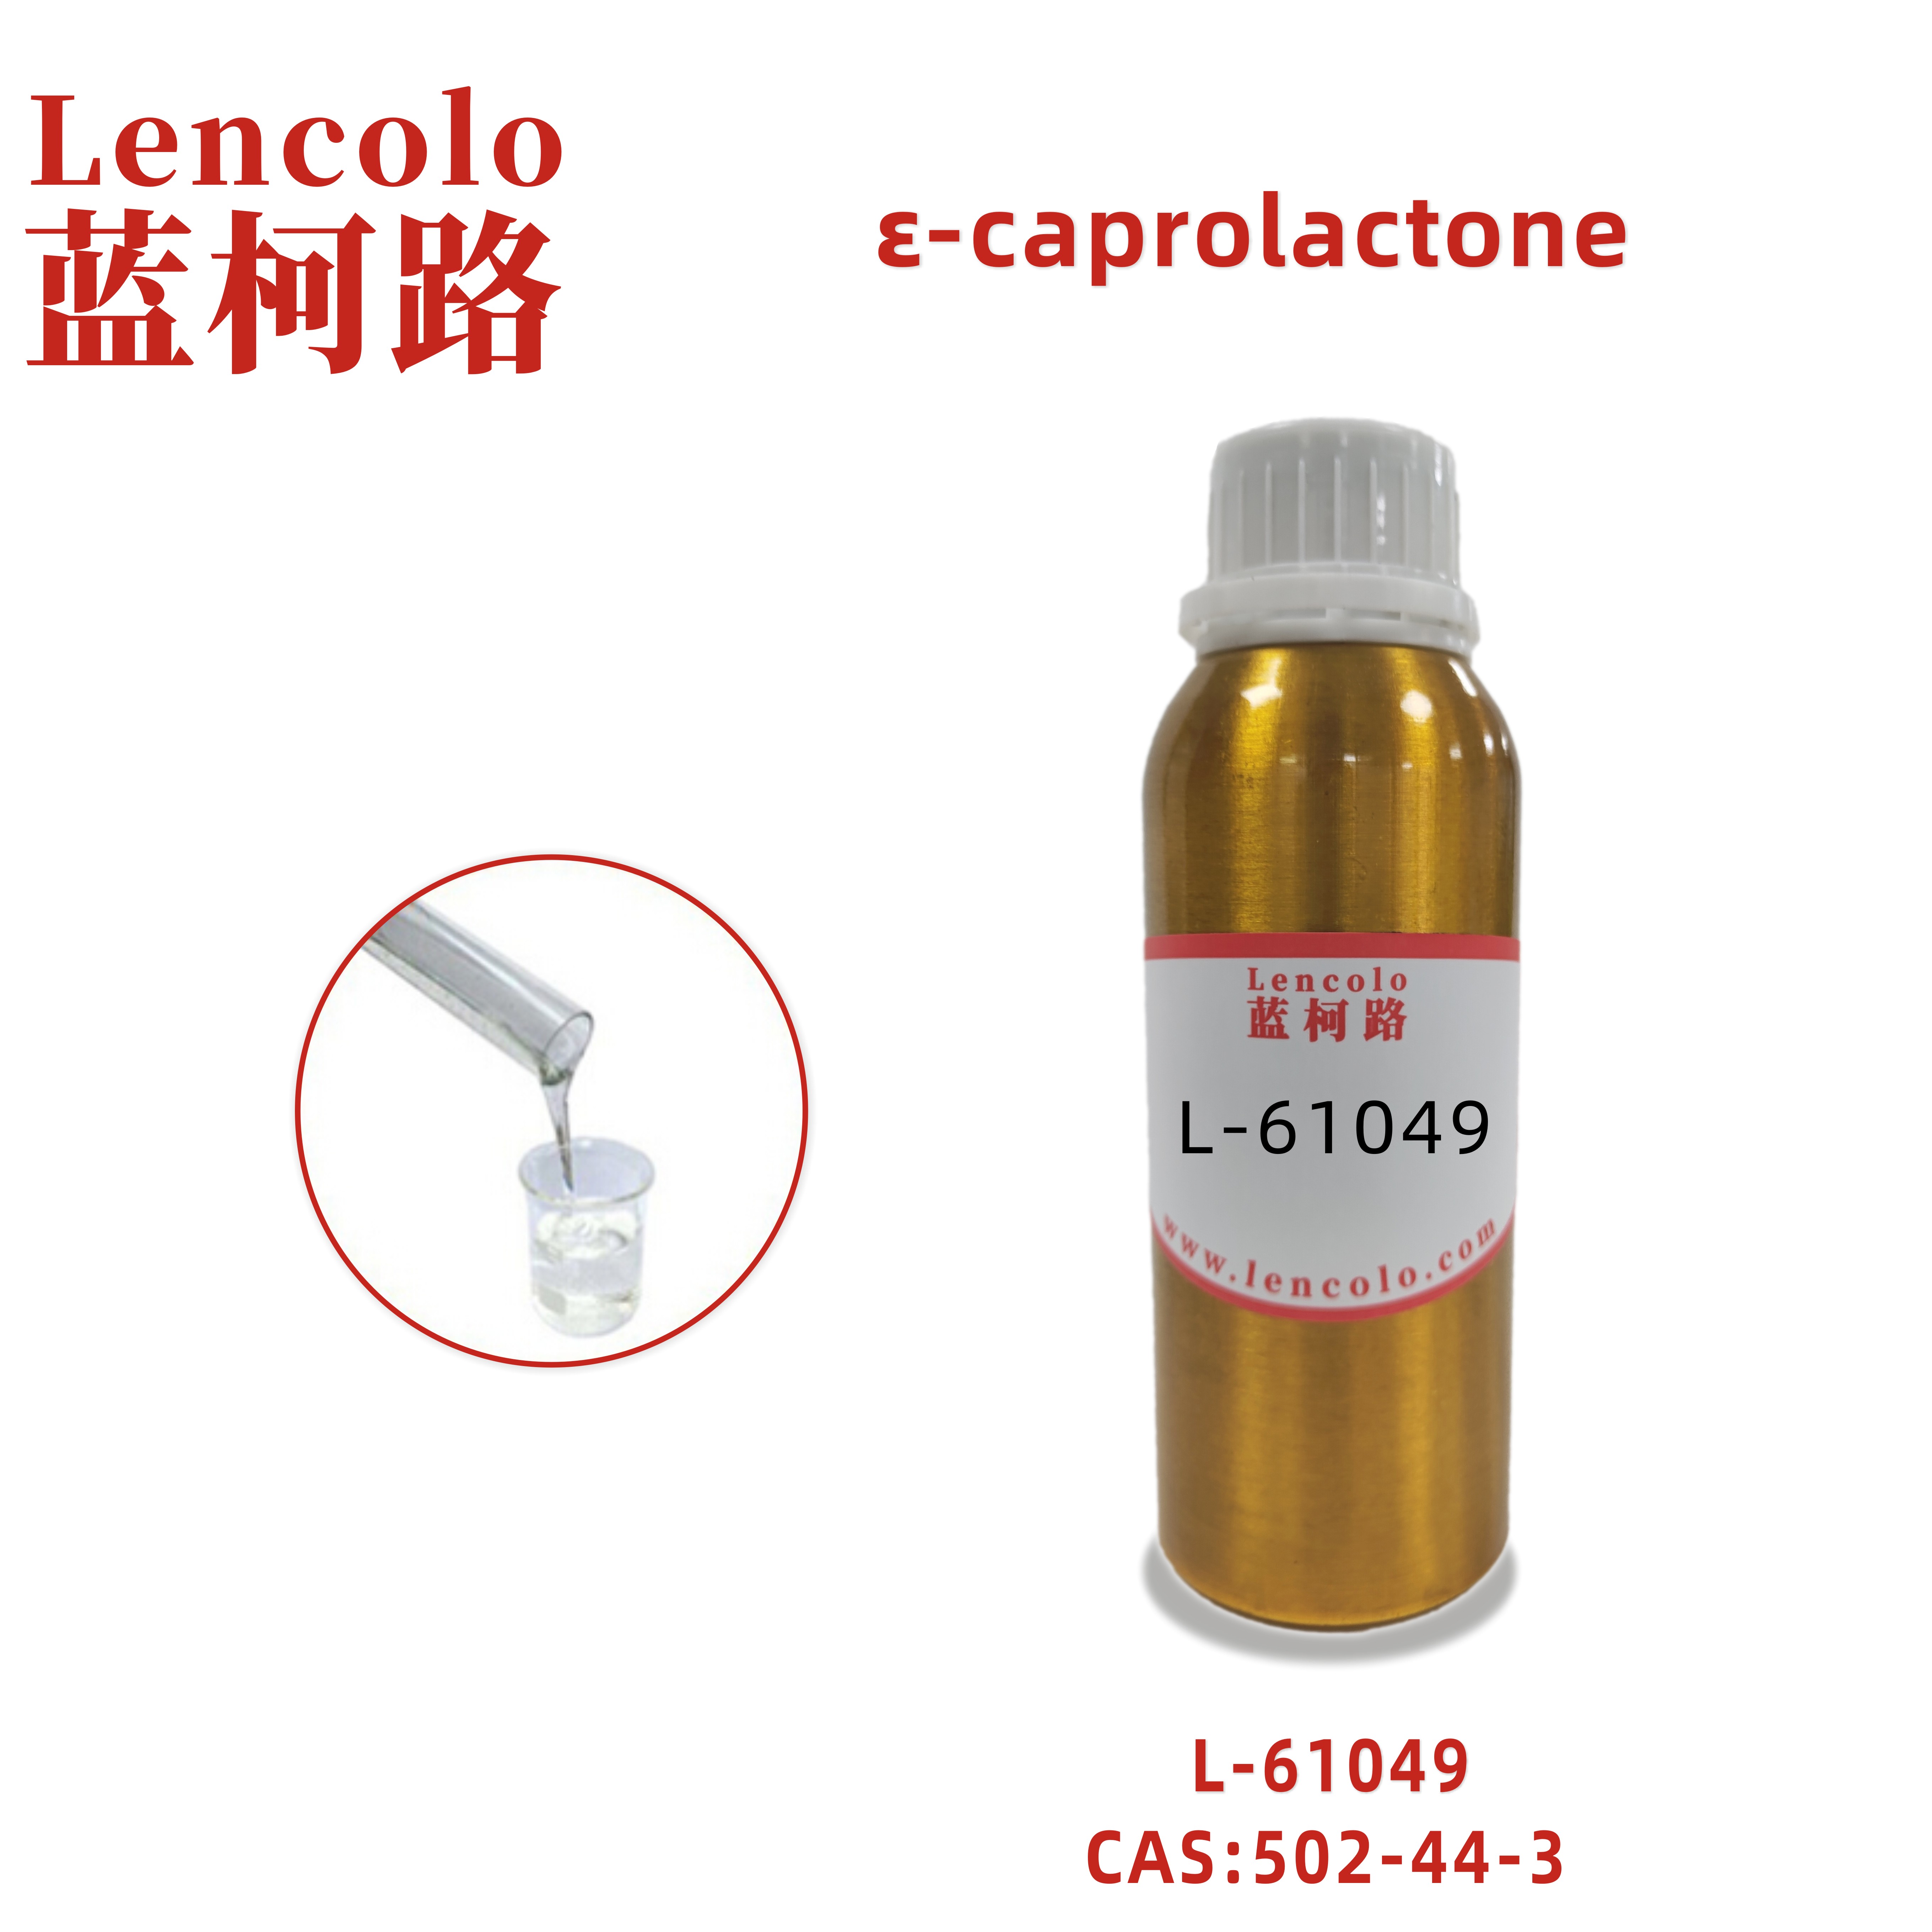 L-61049 ε-caprolactone